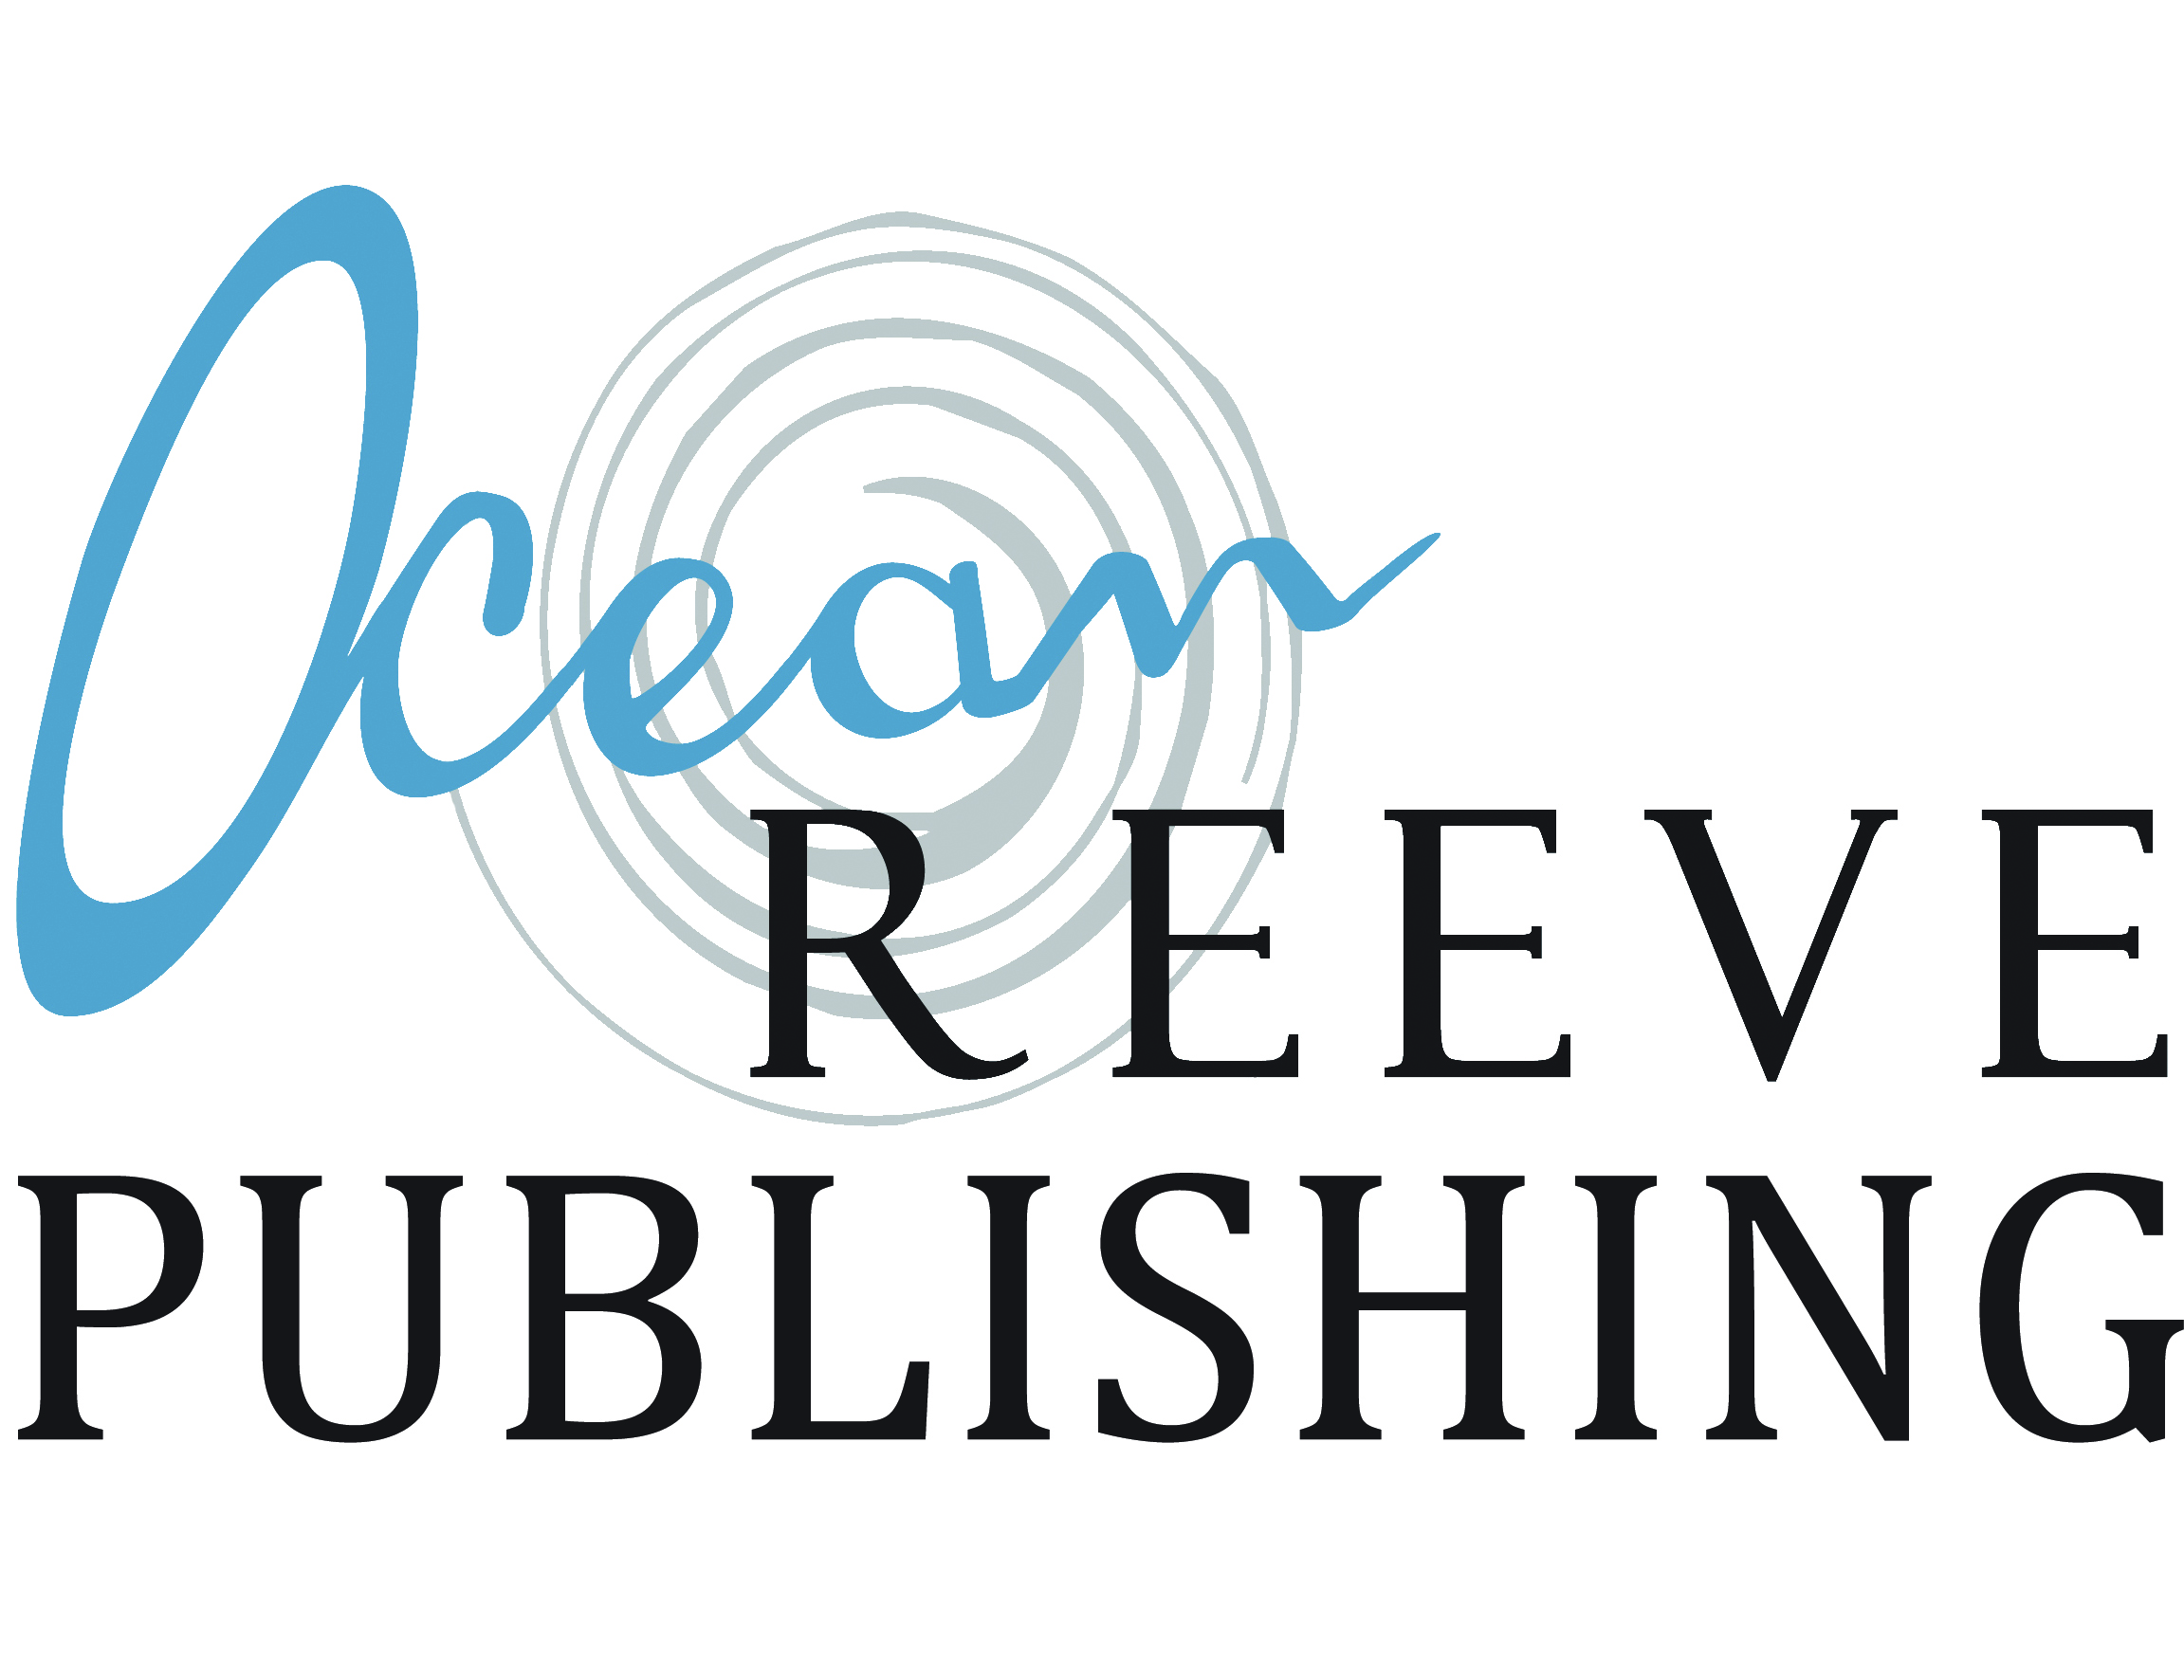 Ocean Reeve Publishing